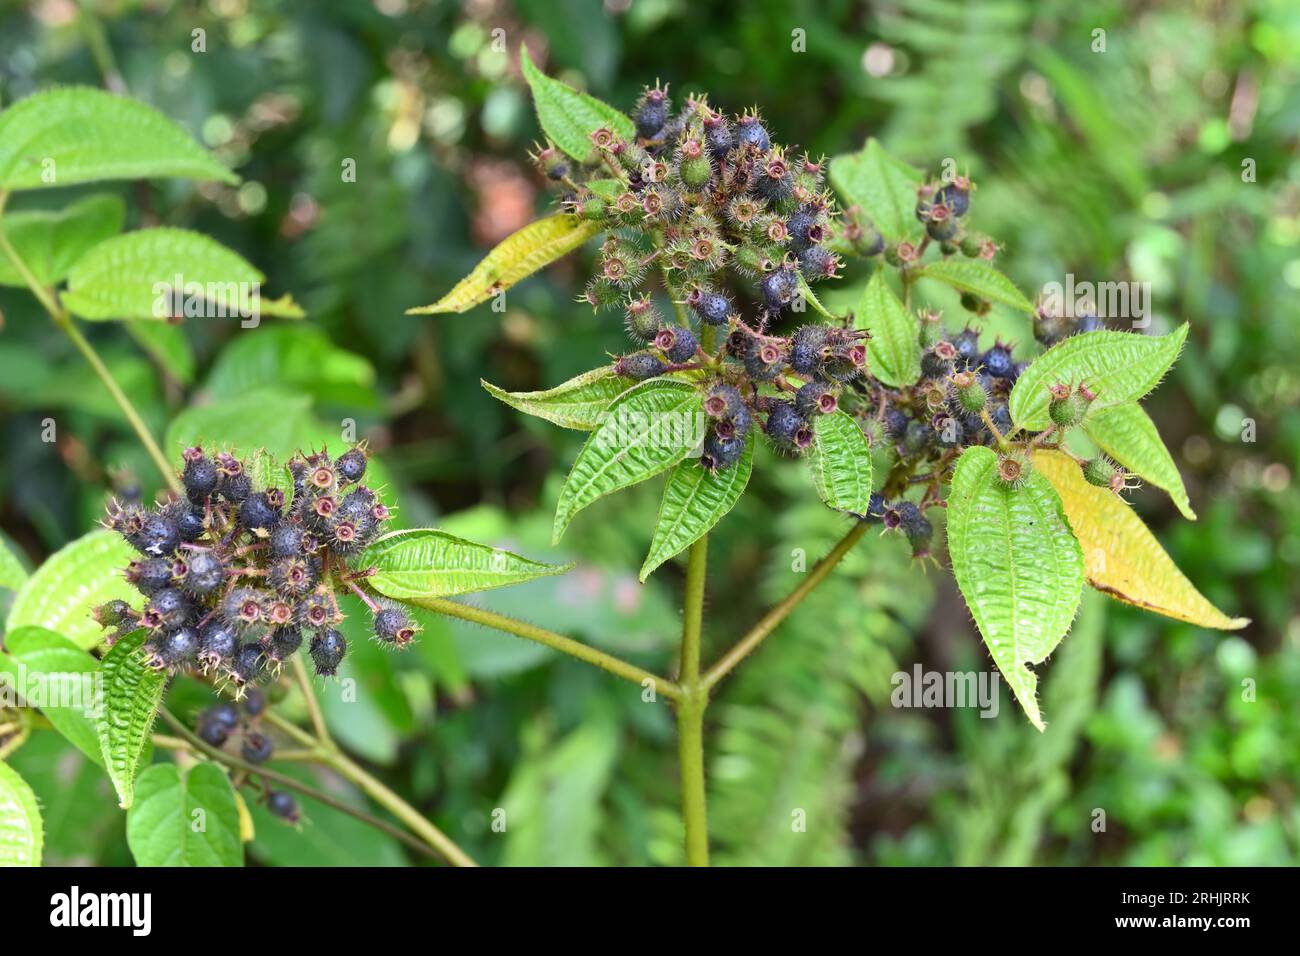 Few ripen purple color hairy fruits clusters on a Soapbush (Miconia Crenata) weed plant Stock Photo